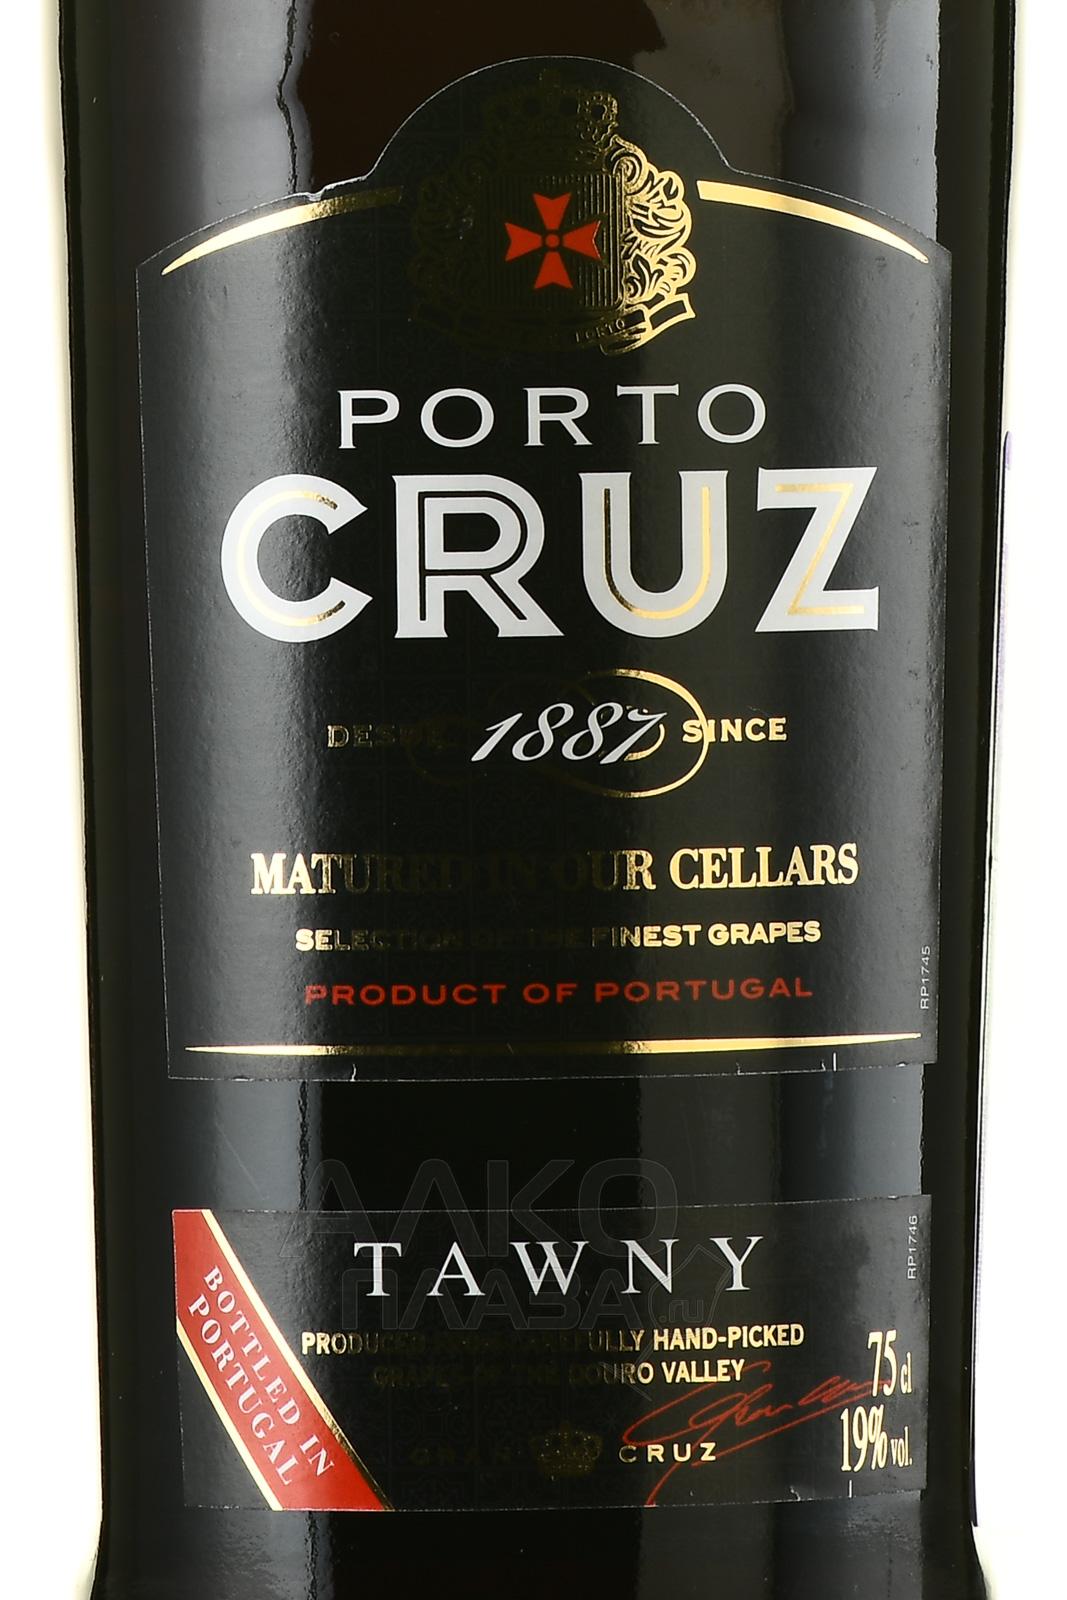 Porto Cruz Tawny - - л Круз Тони цена 0.75 купить портвейн Порто